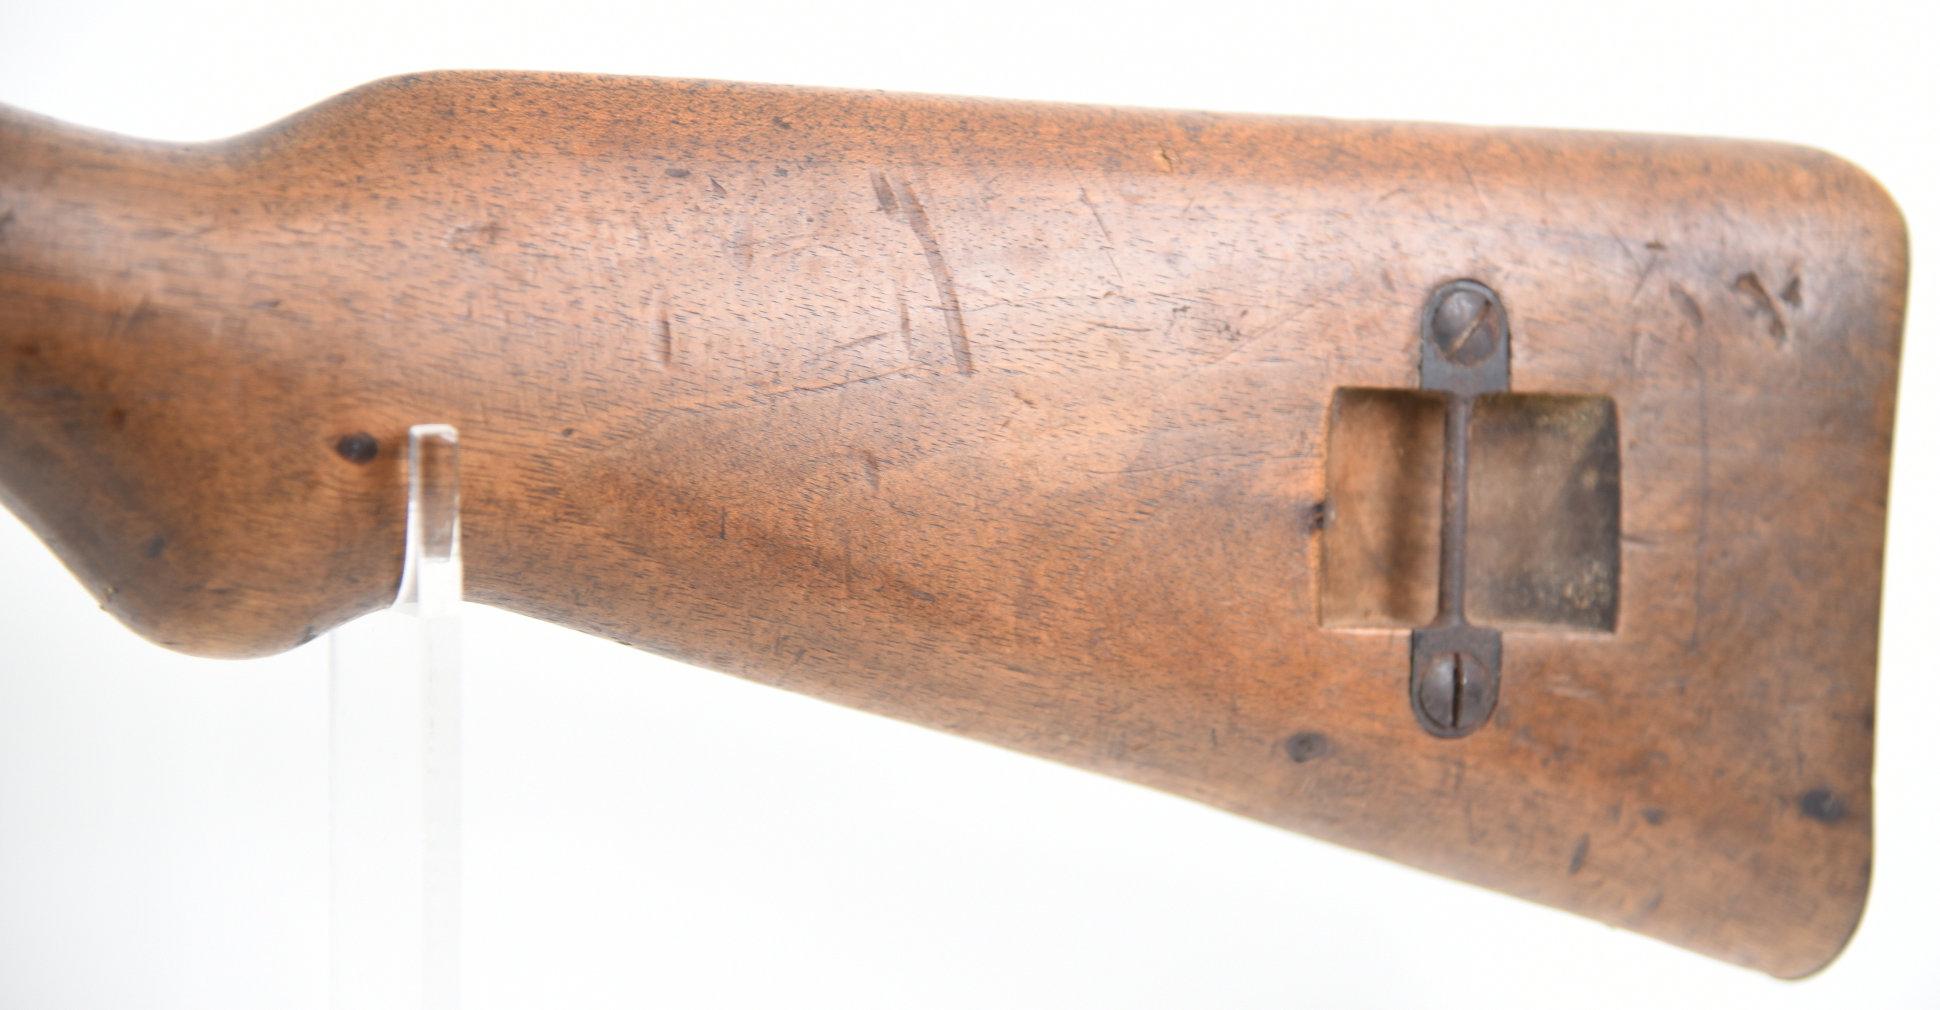 Lot #1600 -  Spanish Mauser 1943 Short Rifle Bolt Action Rifle SN# EA33636 7.92x57 MM